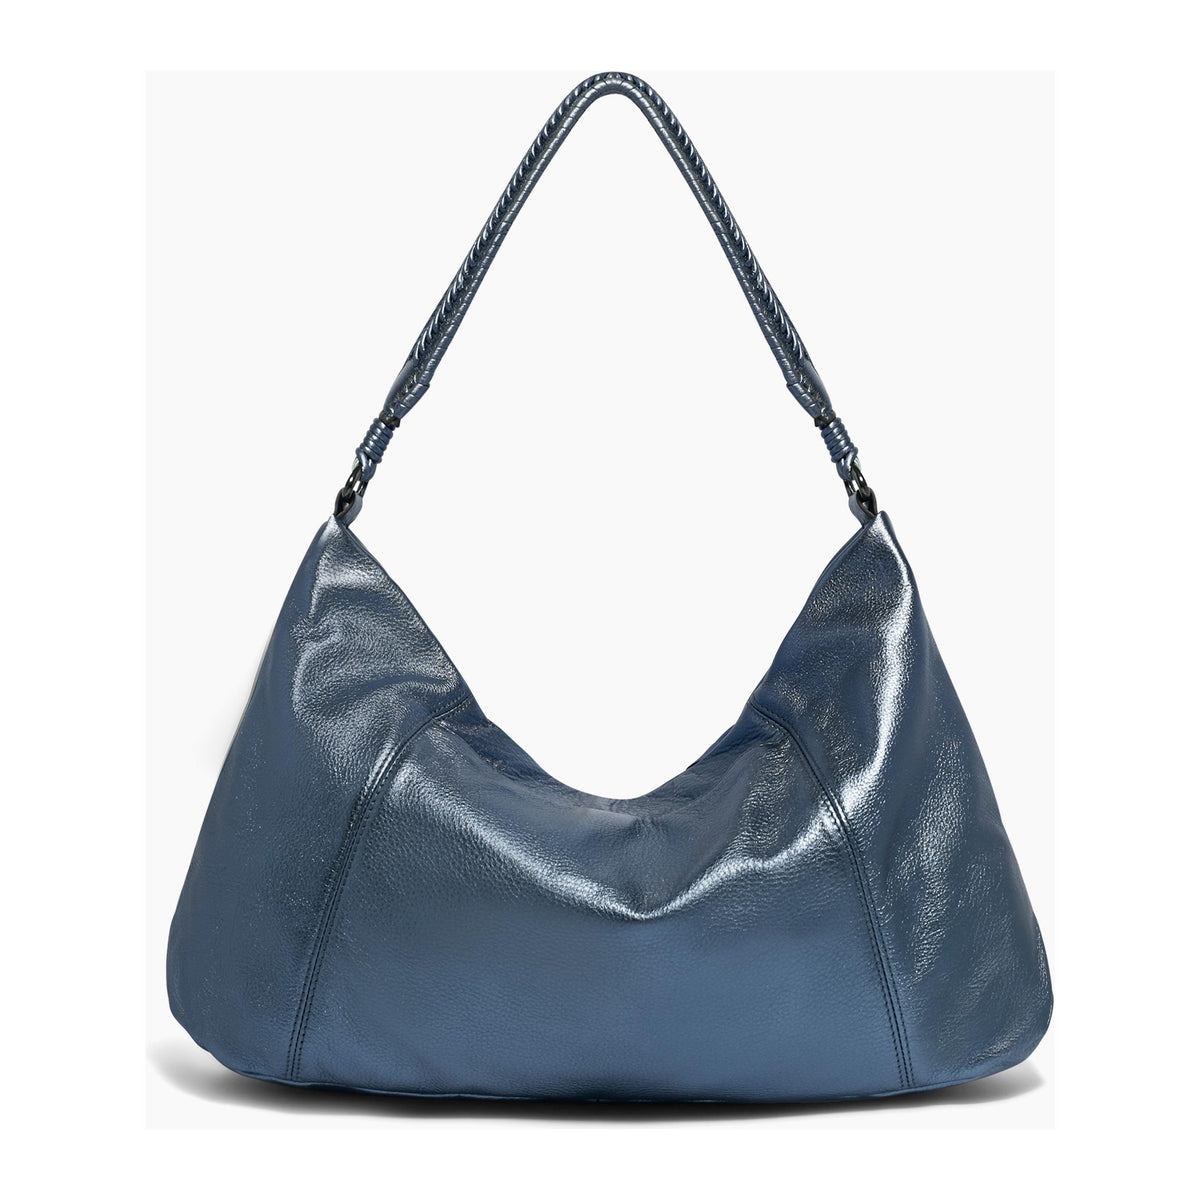 Aimee Kestenberg Powder Blue Metallic / Shoulder Bags All For Love Hobo by Aimee Kestenberg